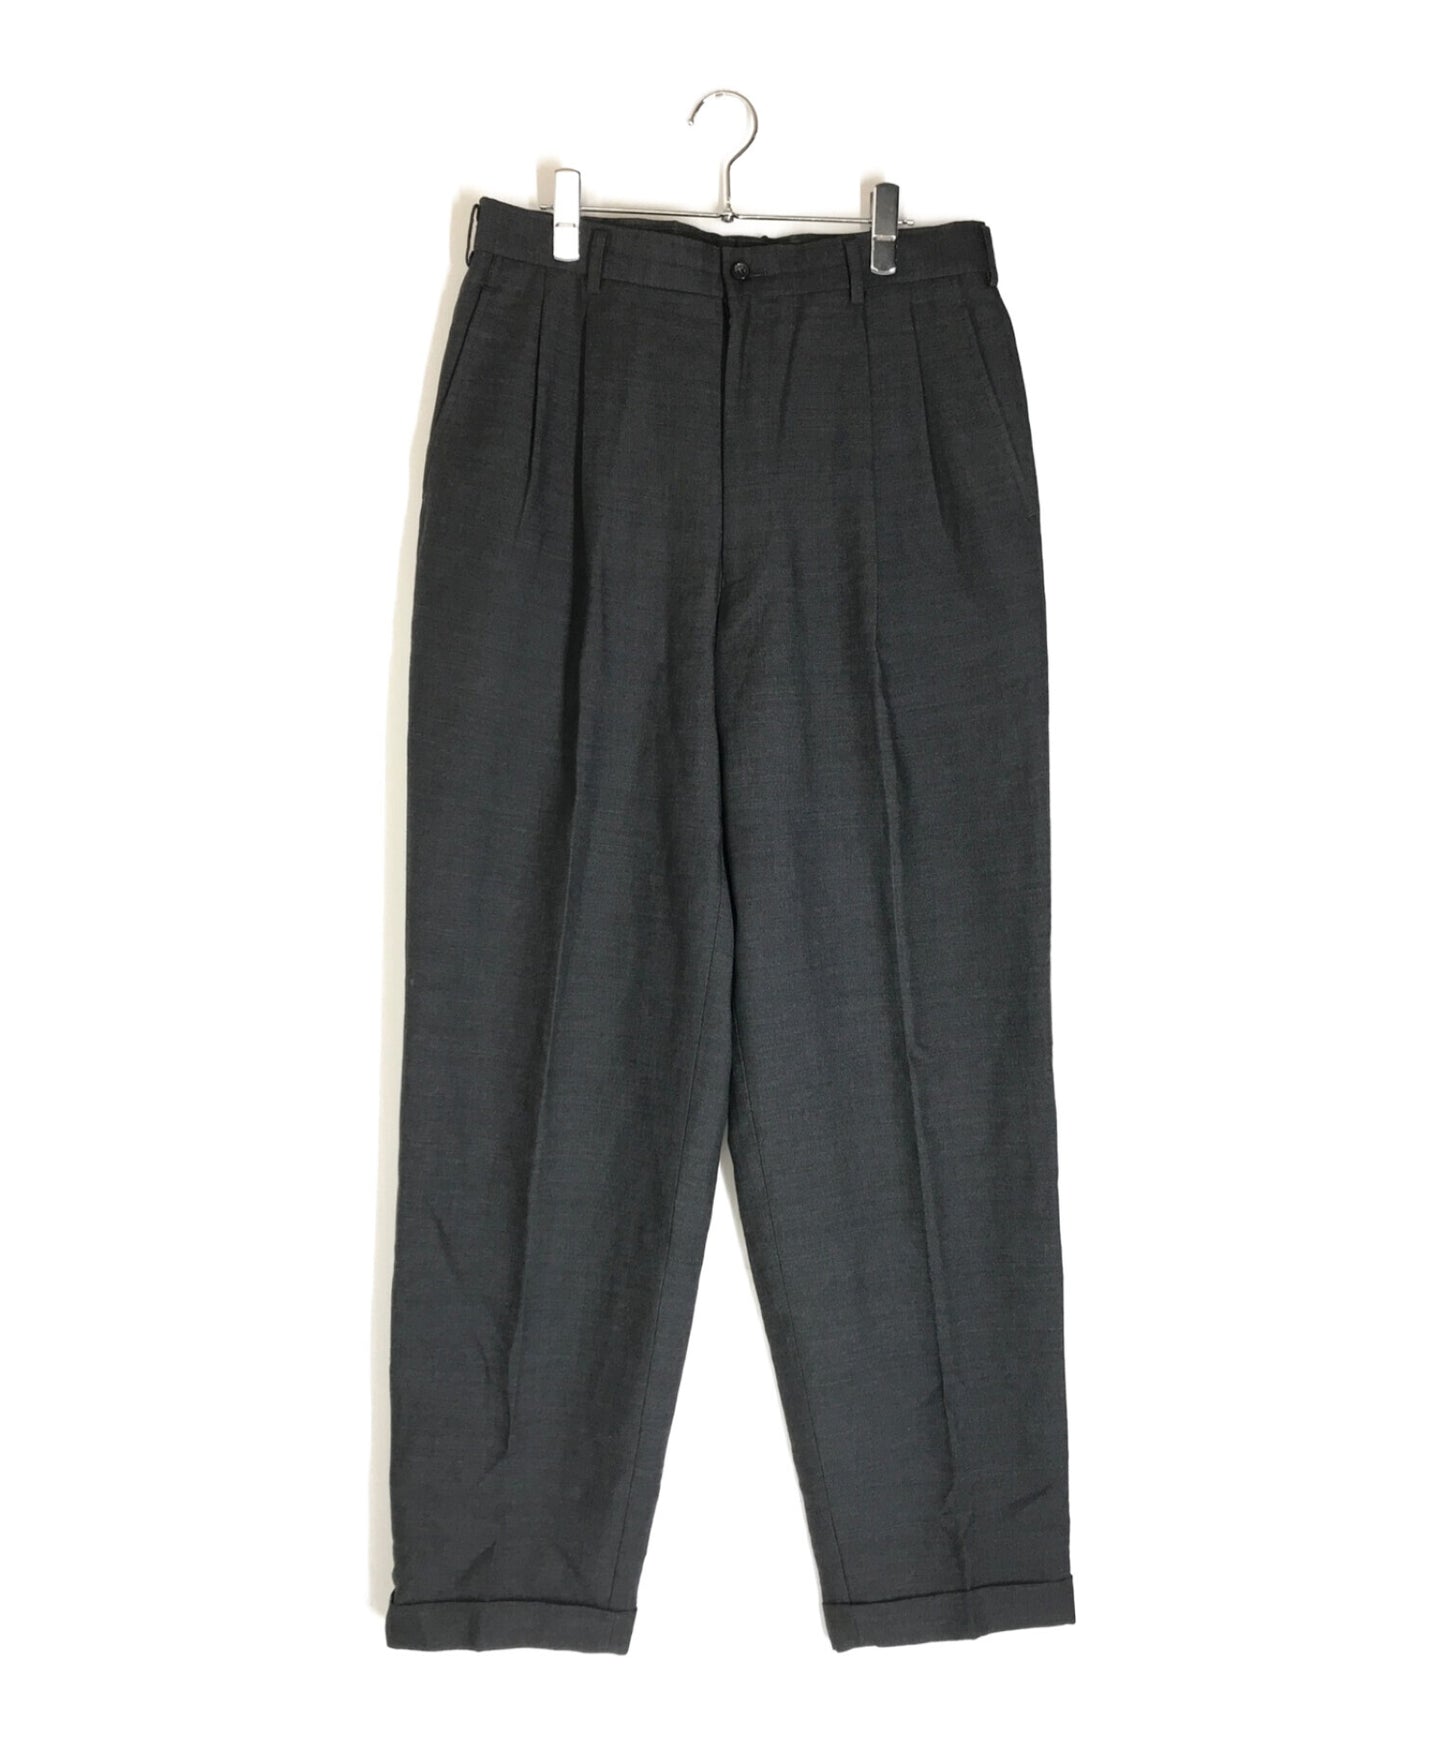 COMME des GARCONS 90s two-tucked wool wide slacks pants HS-10006M